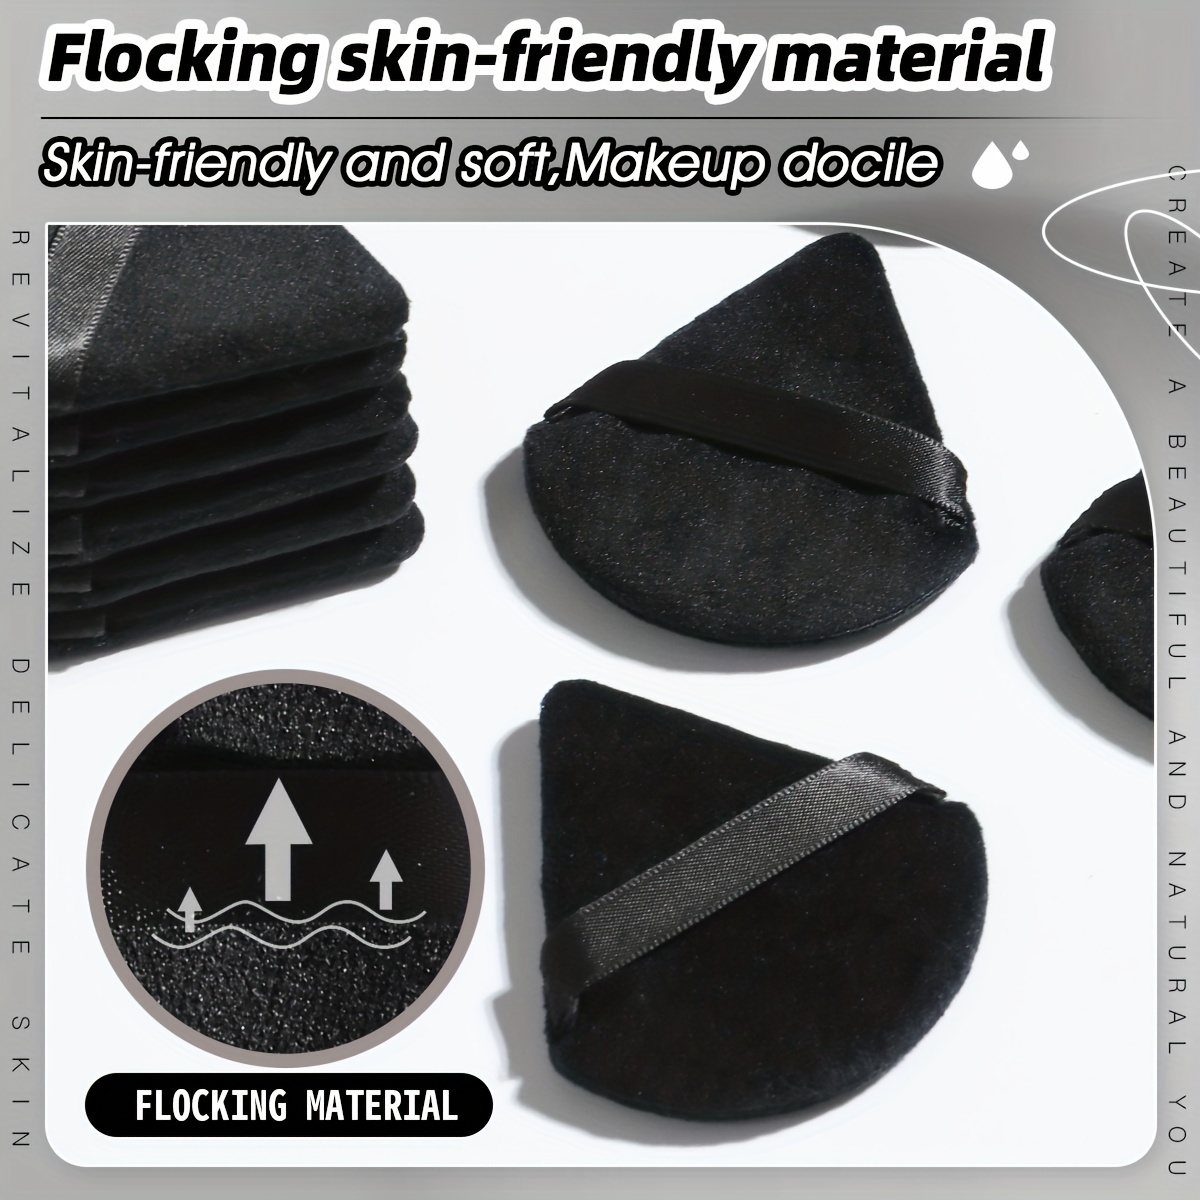 Esponja de polvo triangular, 3 piezas de terciopelo negro + 3 esponjas de  maquillaje de terciopelo blanco para base de cara, diseño triangular